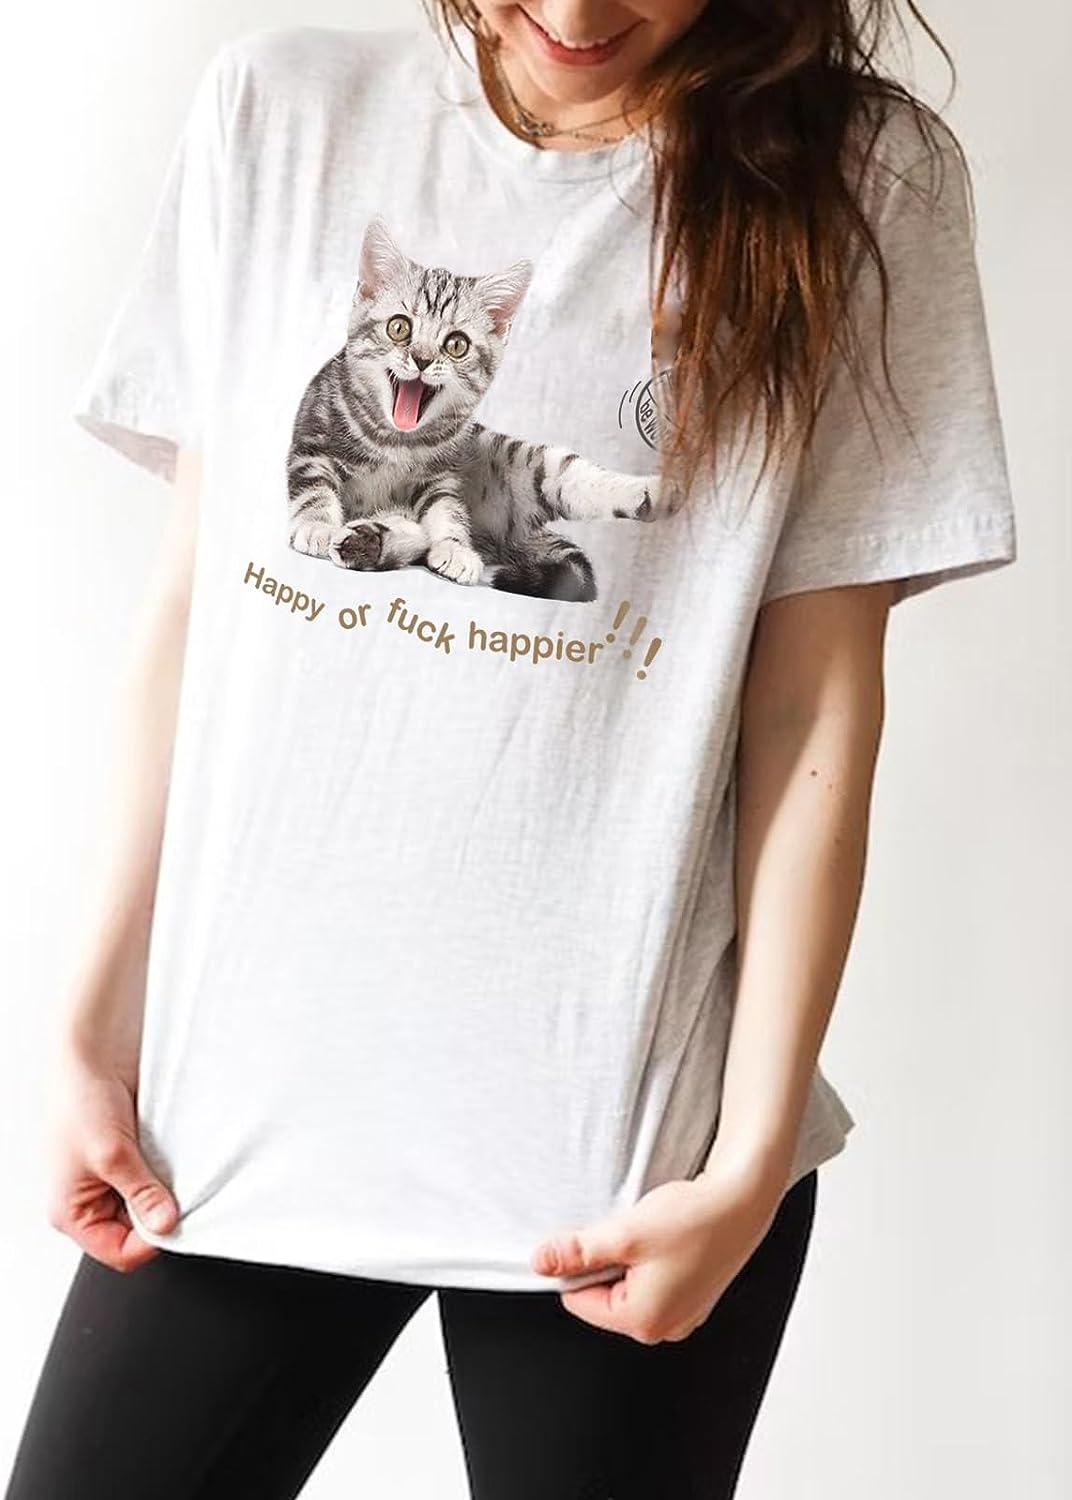 CORIRESHA Camiseta de gato feliz para mujer, cuello redondo, manga corta, verano, suelta, linda camiseta